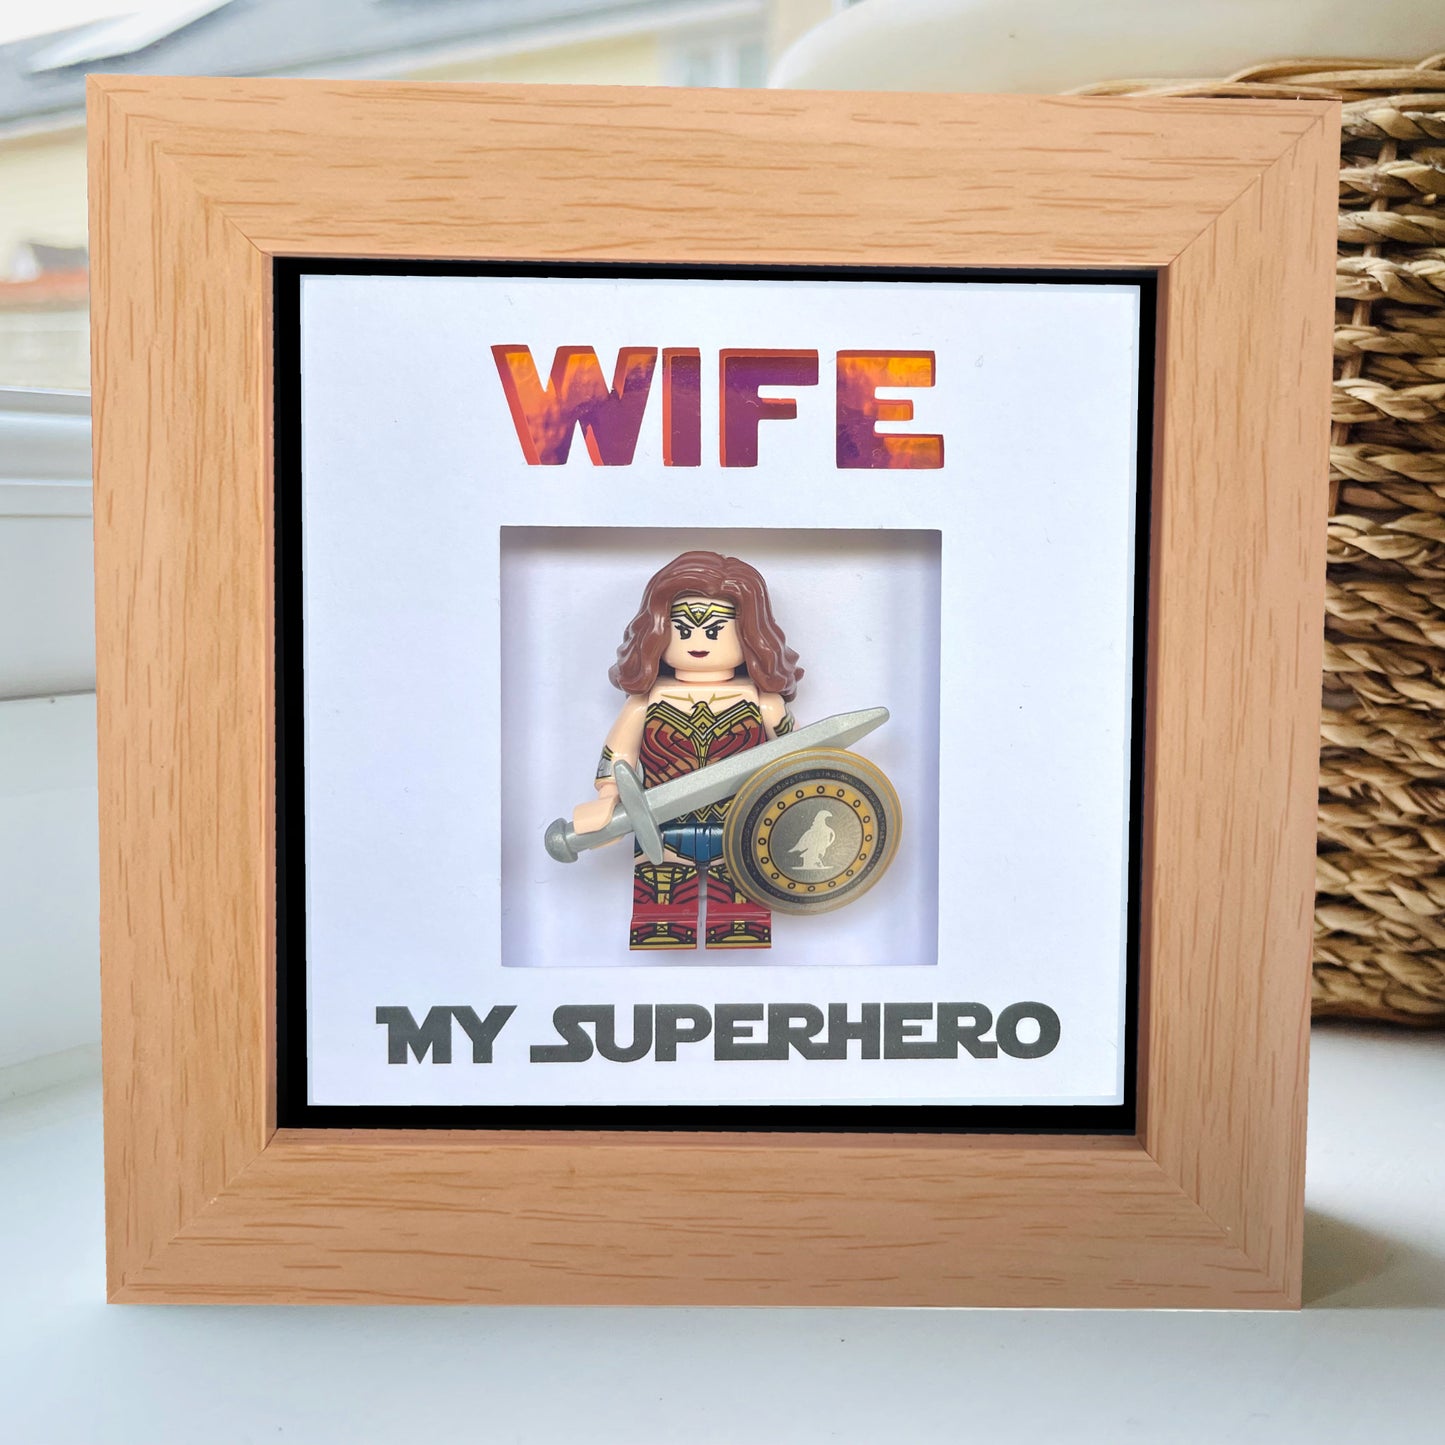 Mum/ Wife Superhero Character Miniature